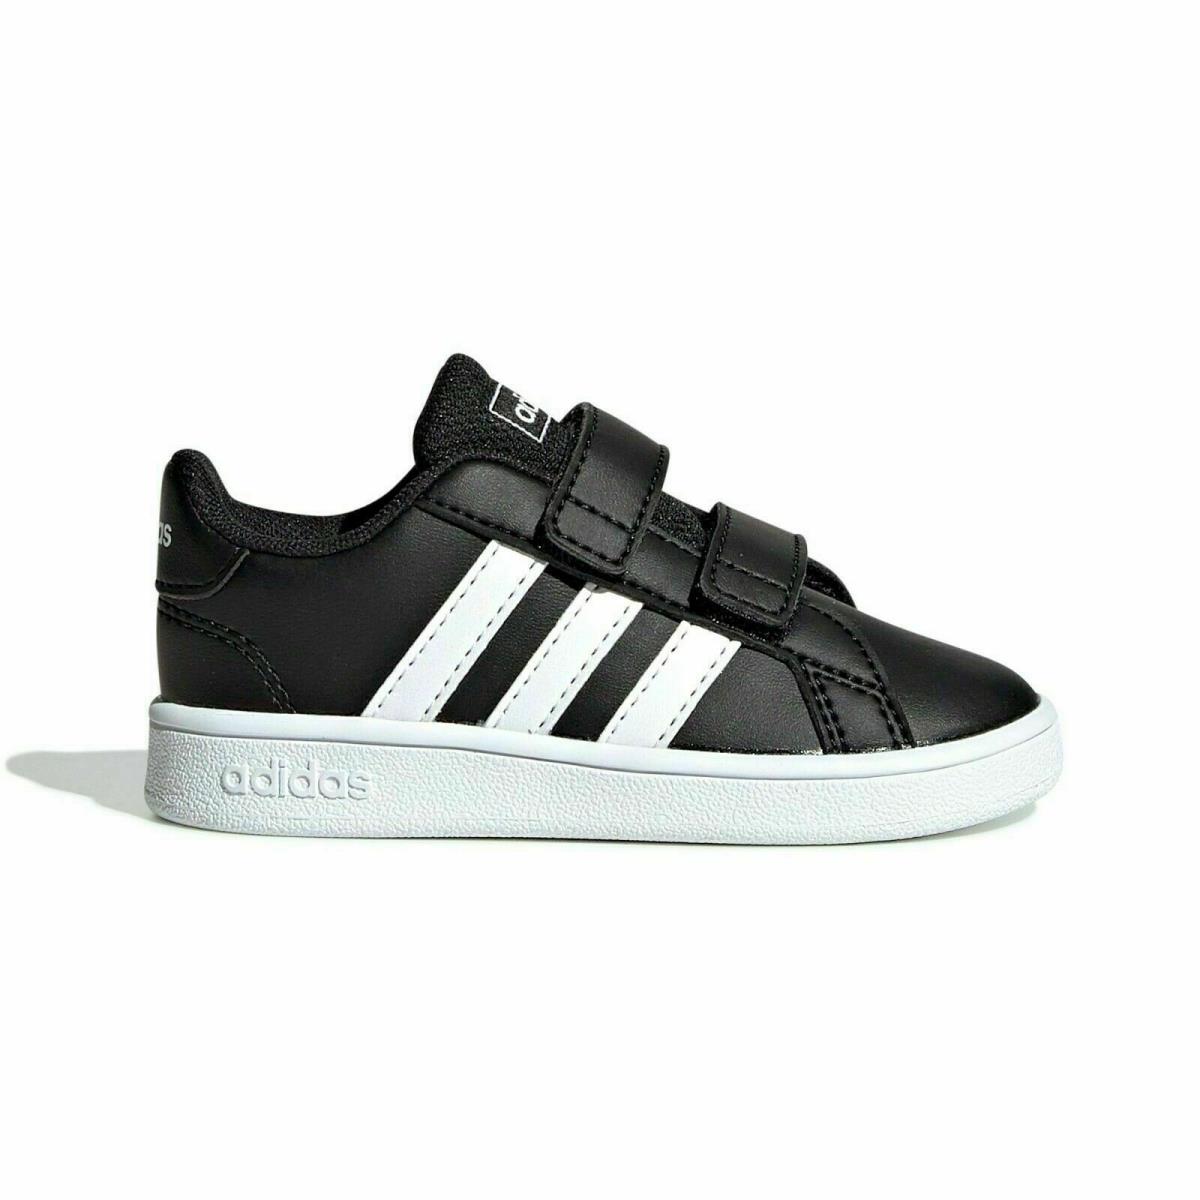 Toddler Adidas Grand Court Black White Sneaker Tennis Shoes Brand